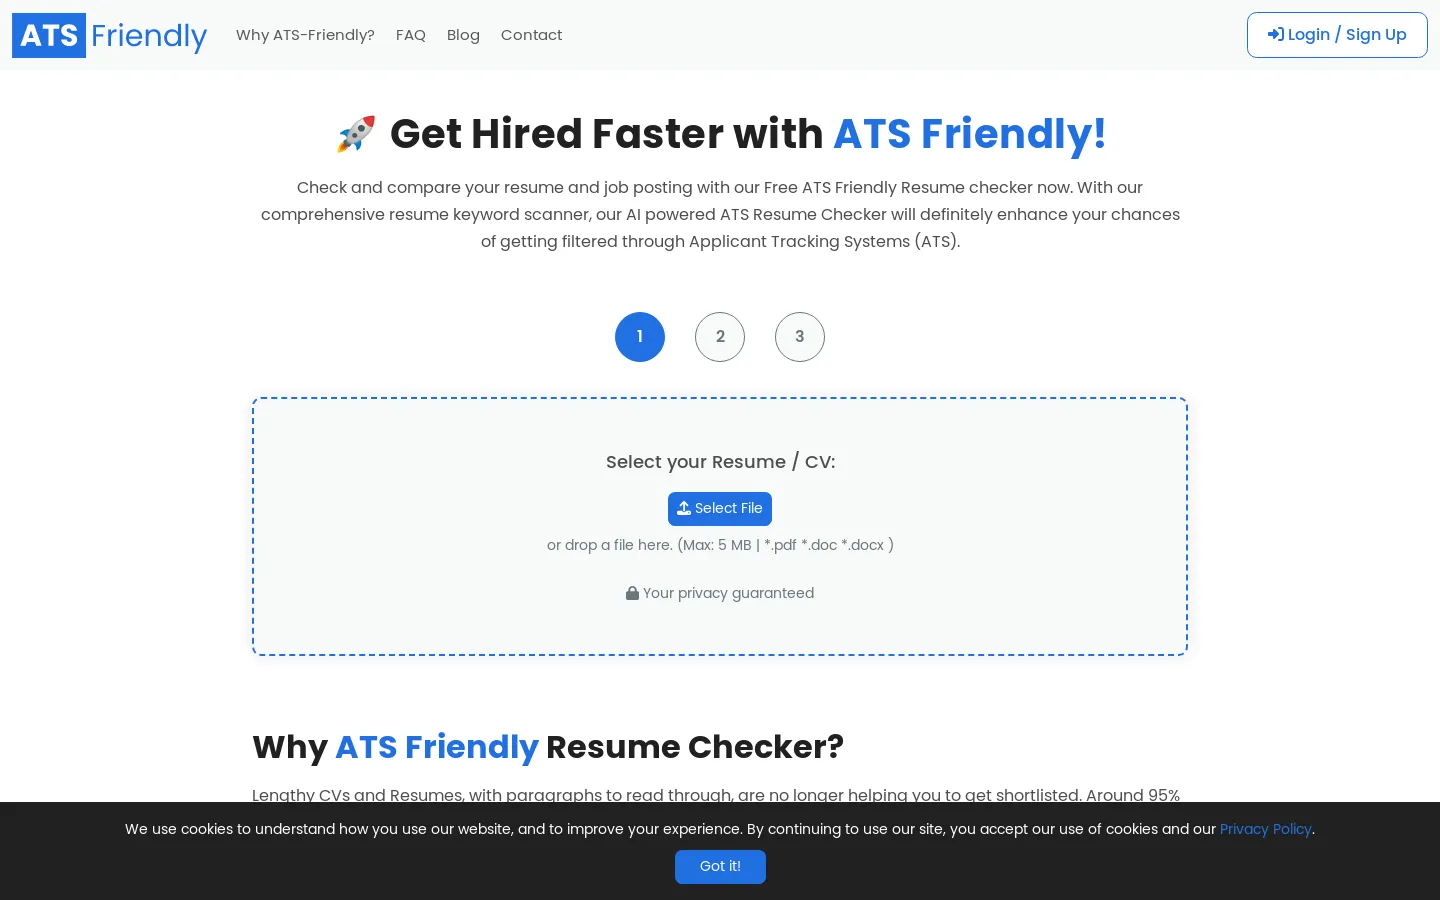 Free ATS Friendly Resume Checker | ATSFriendly.com